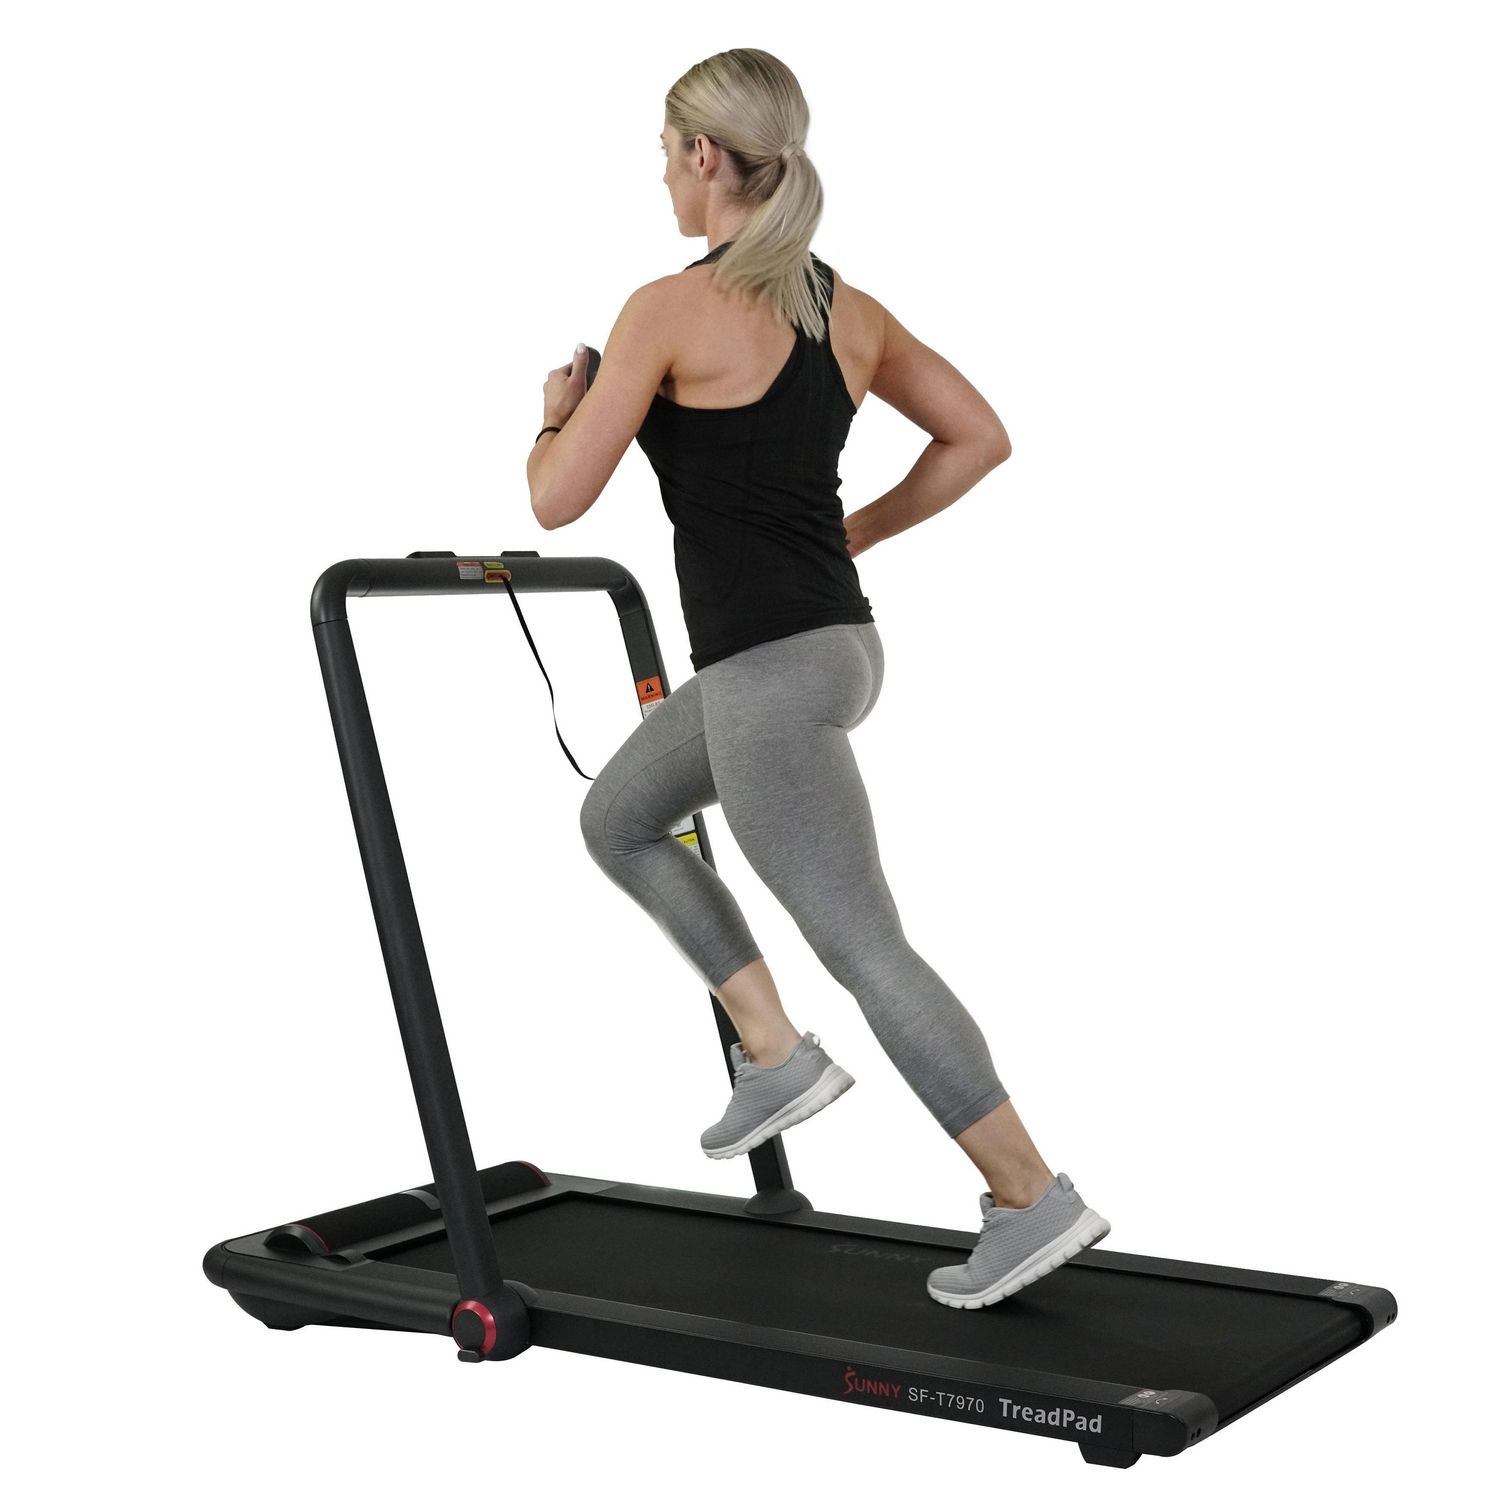 Sunny Health & Fitness Treadpad Flat Folding Treadmill with Premium Sound System SFT7970